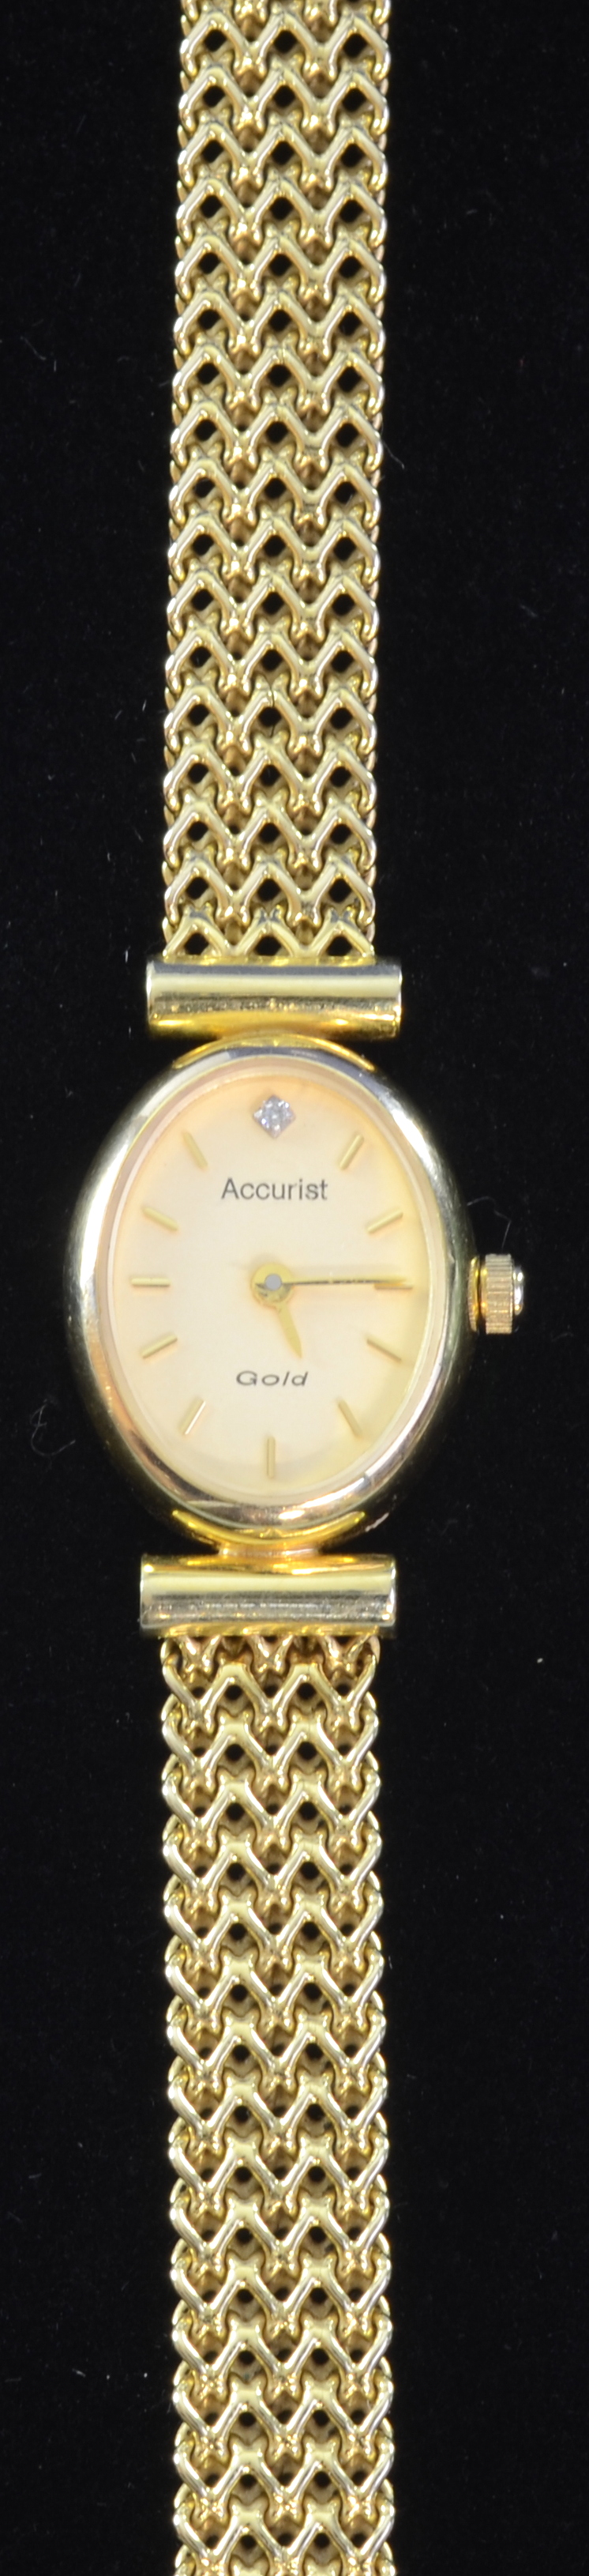 Accurist gold watch in presentation case unused